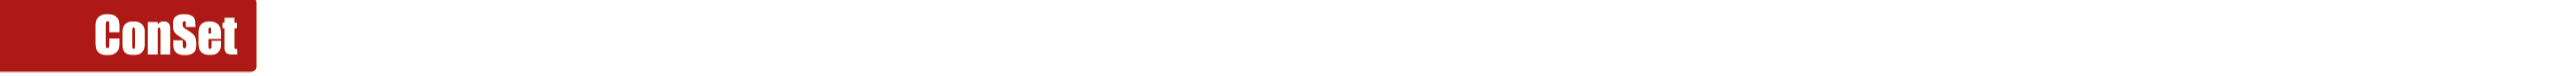 ConSet official logo.jpg